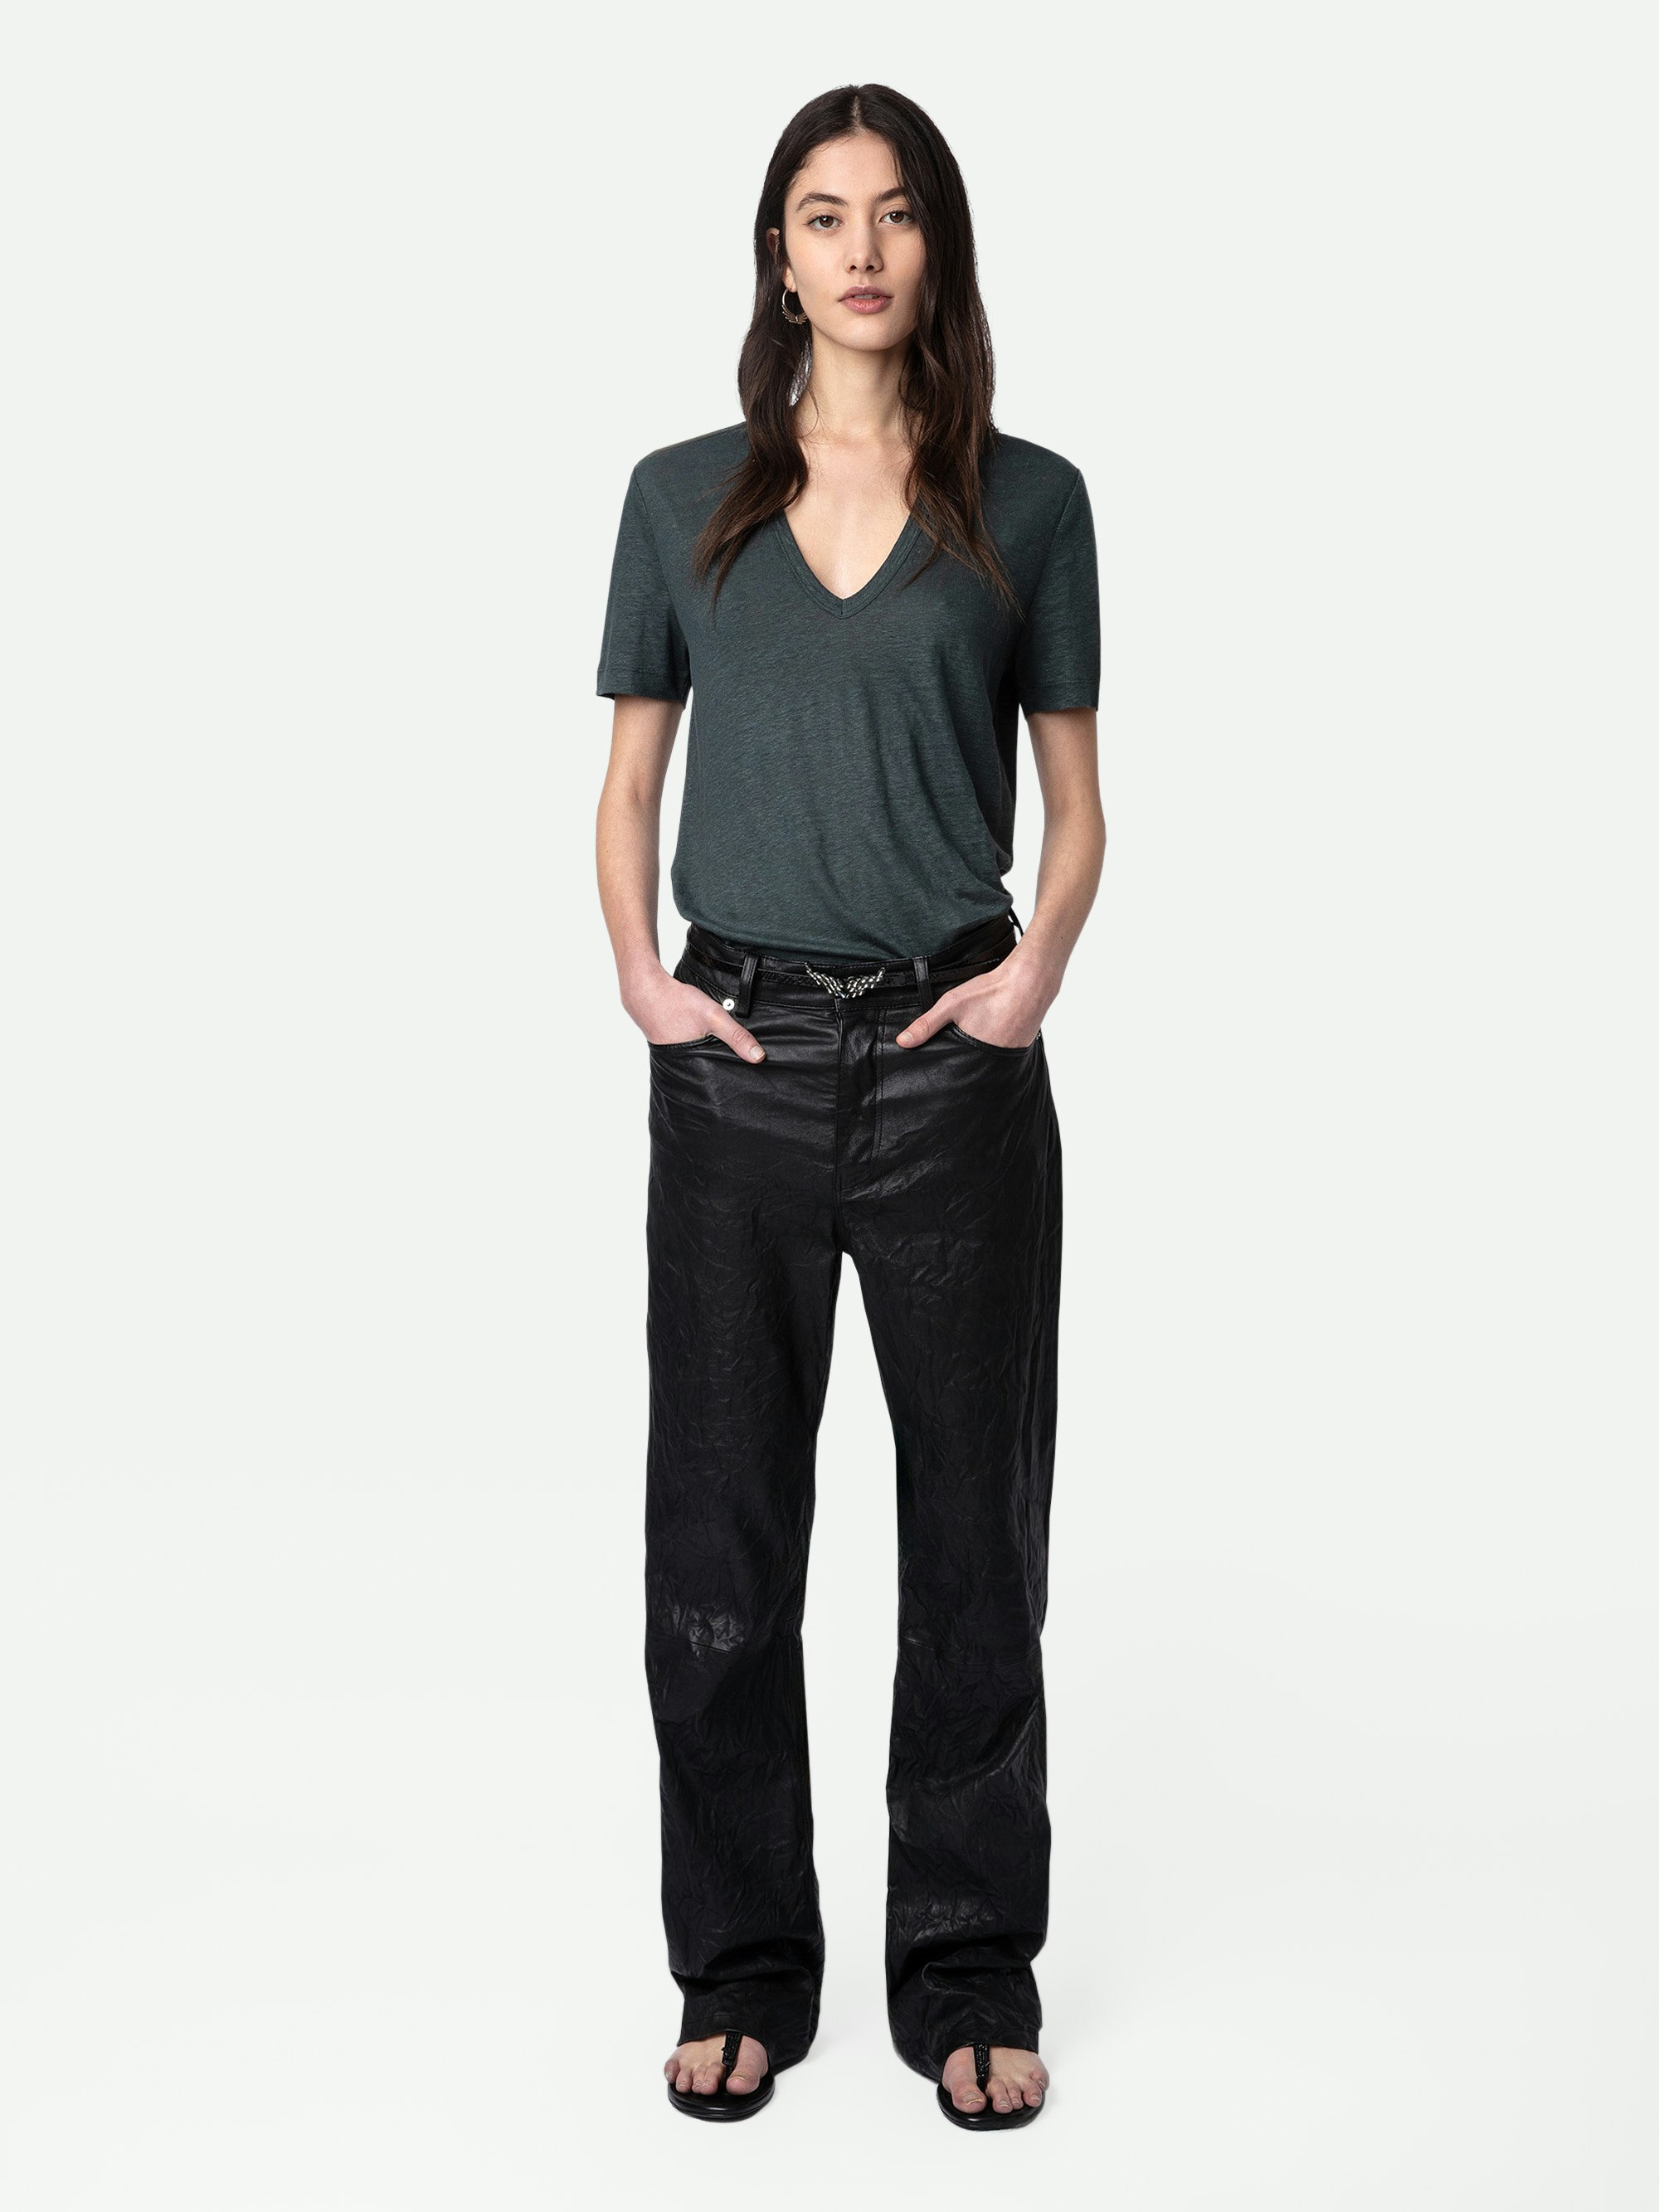 Wassa Linen T-shirt - Dark grey organic linen T-shirt with V neckline and short sleeves.